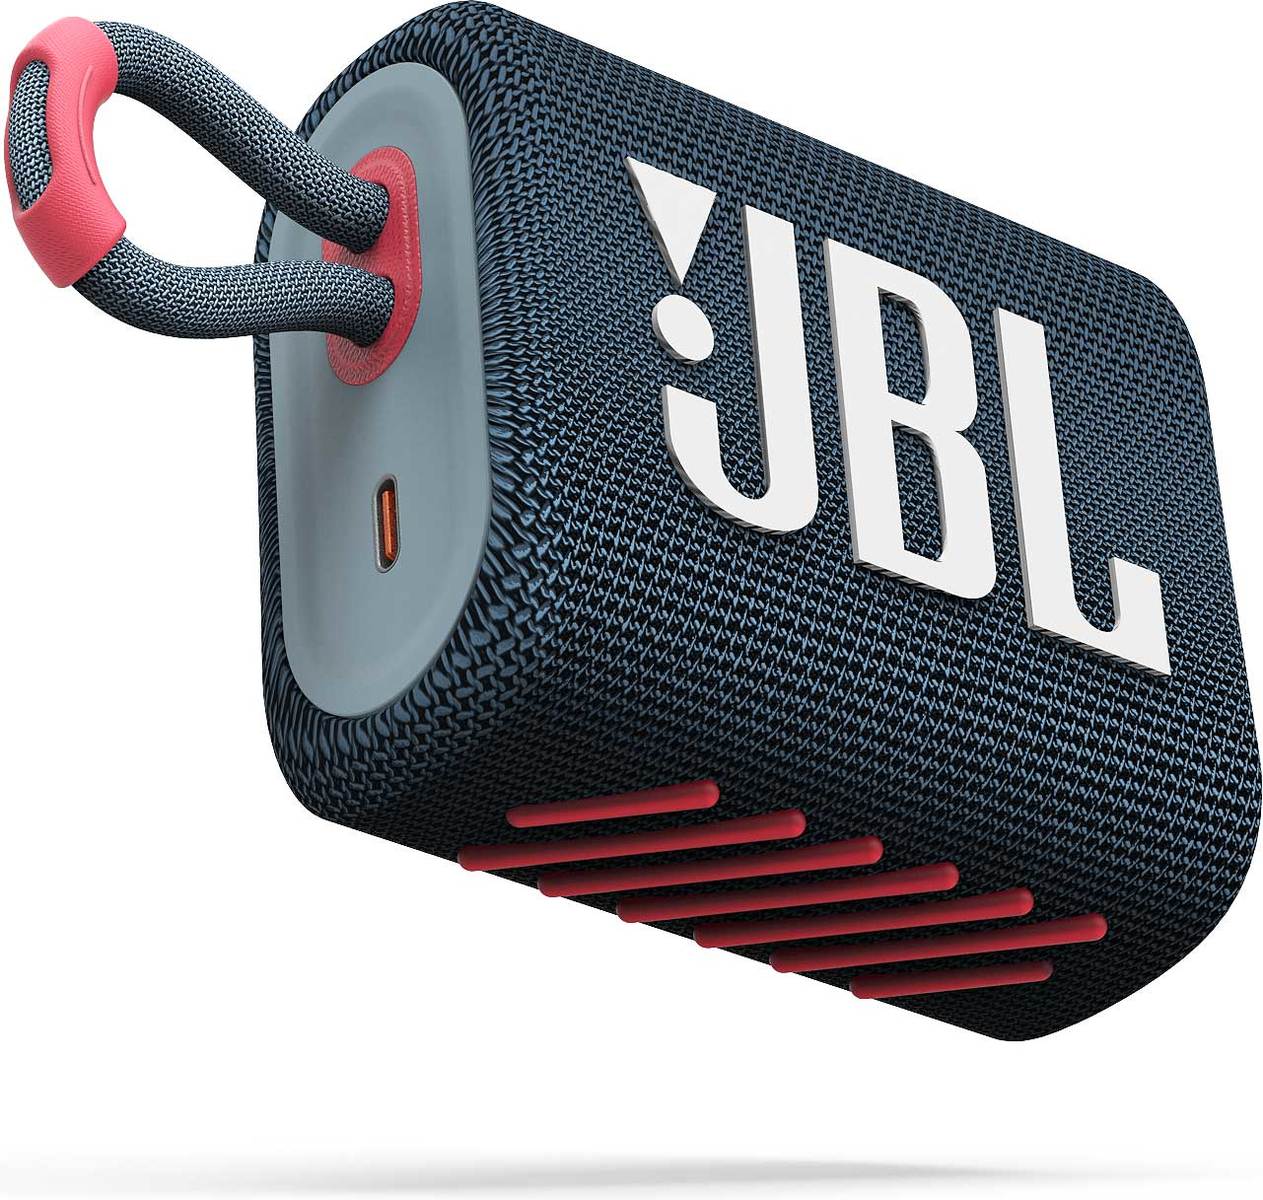 JBL GO3BLUP blauw roze compacte bluetooth speaker